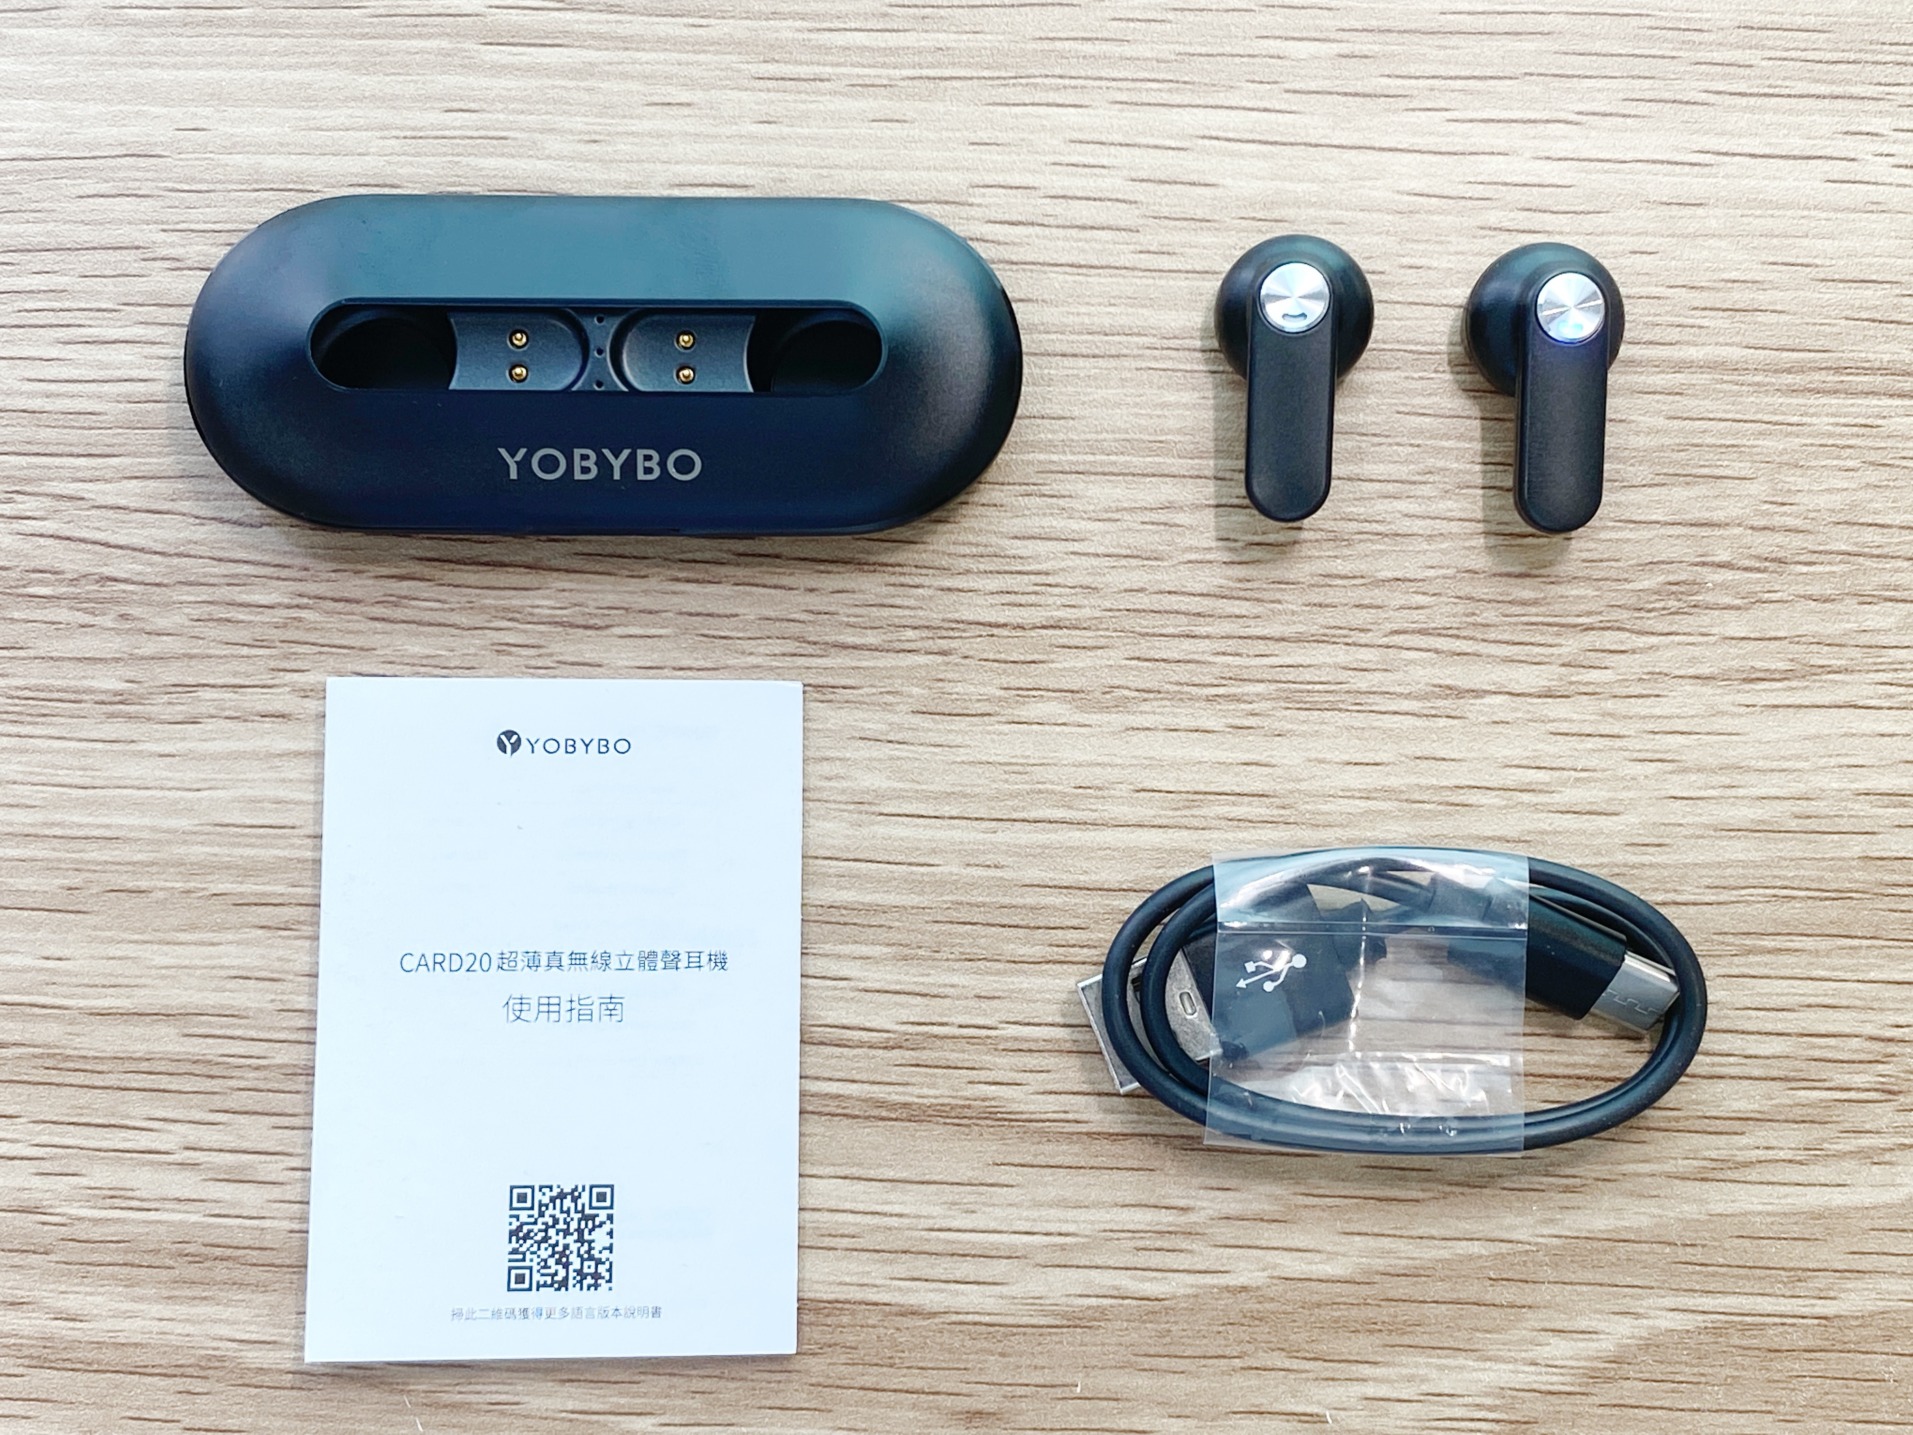 YOBYBO CARD20レビュー】「世界最薄」の完全ワイヤレスイヤホンは装着 